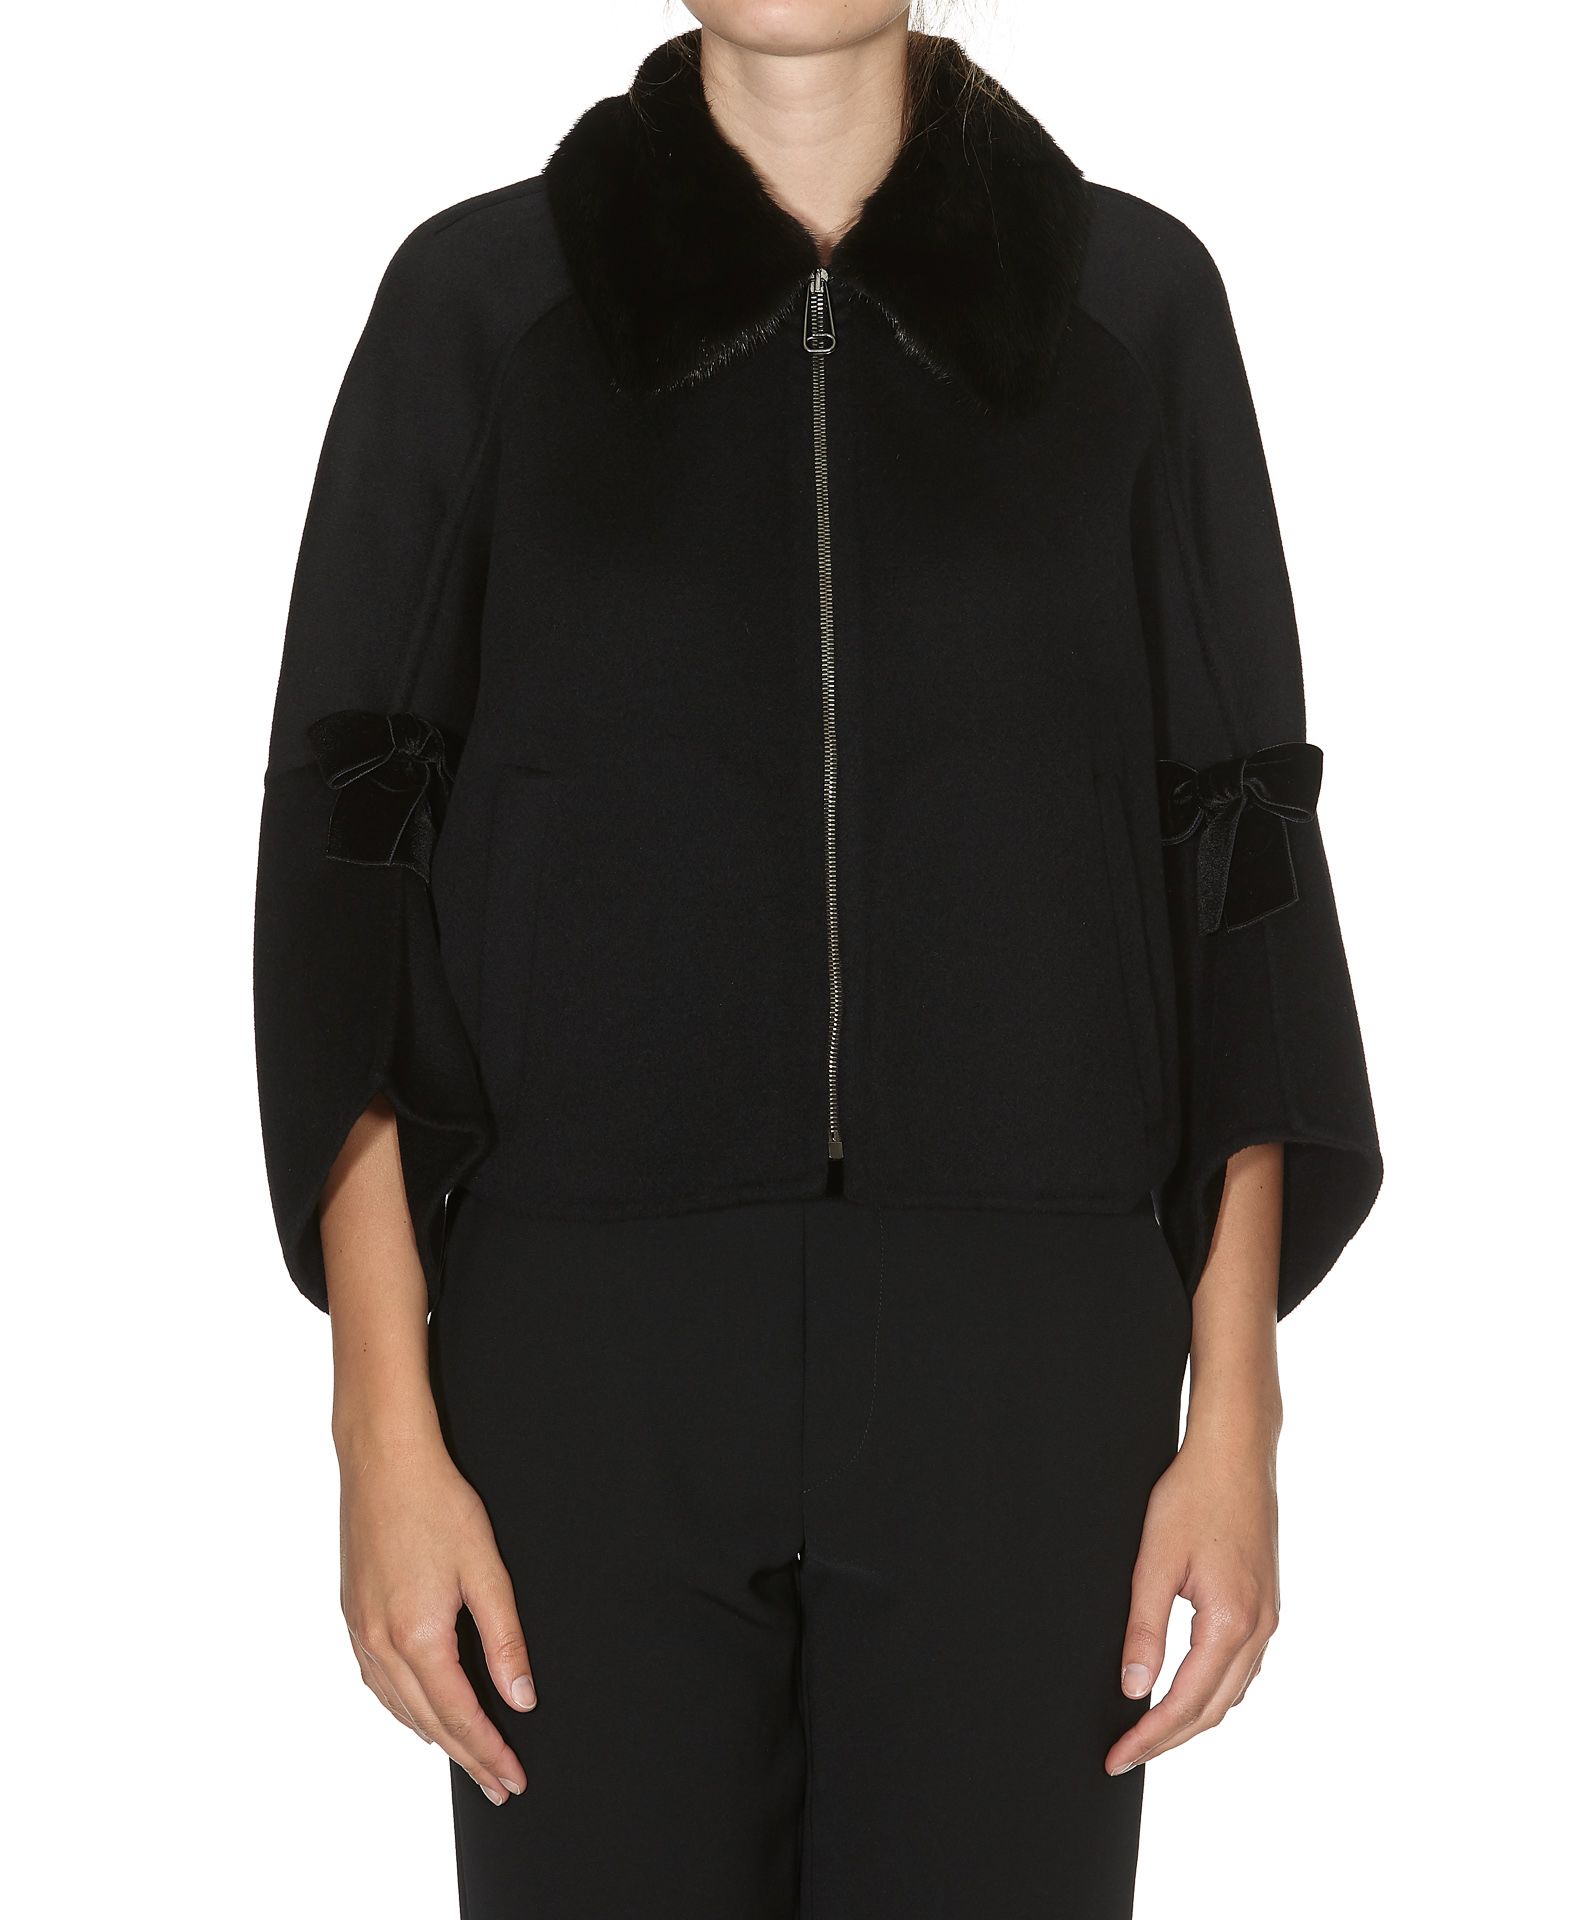 italist | Best price in the market for Fendi Fendi Jacket - Black